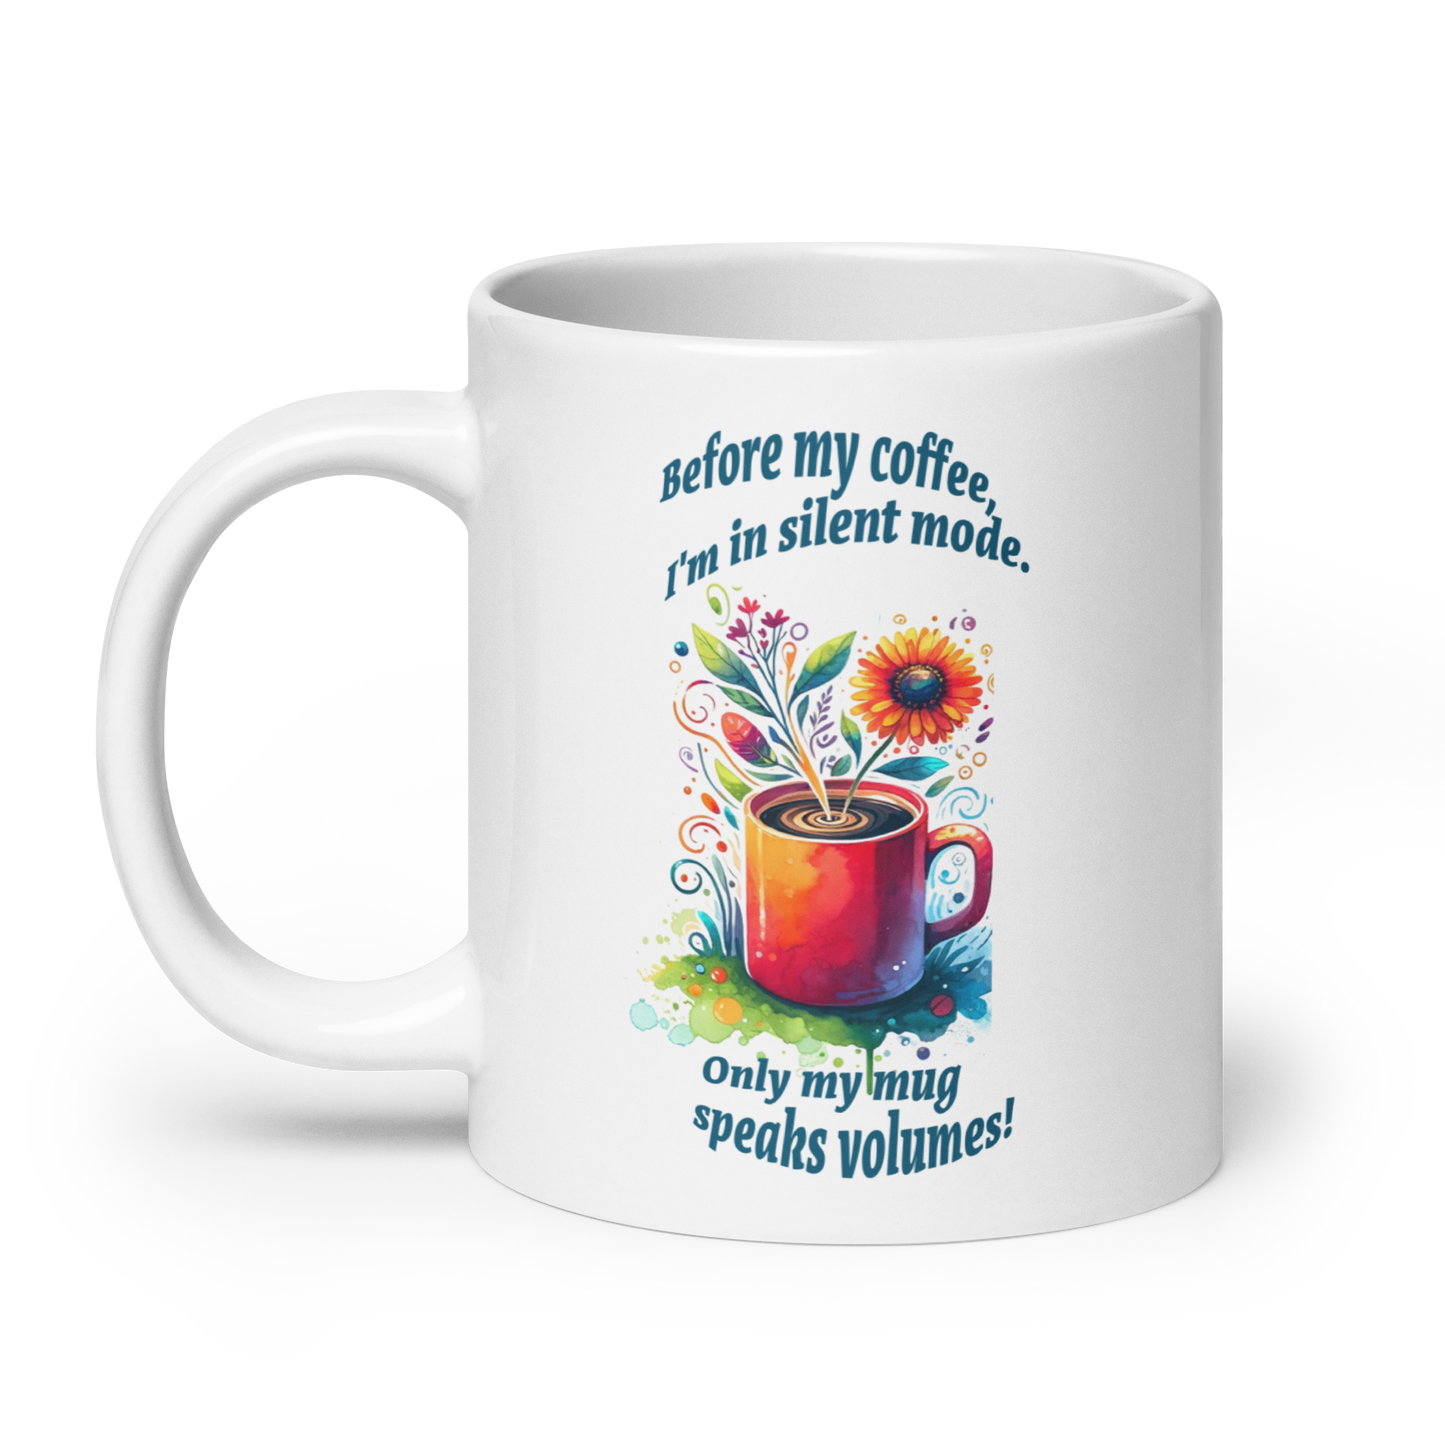 Morning Solitude: The Expressive Mug